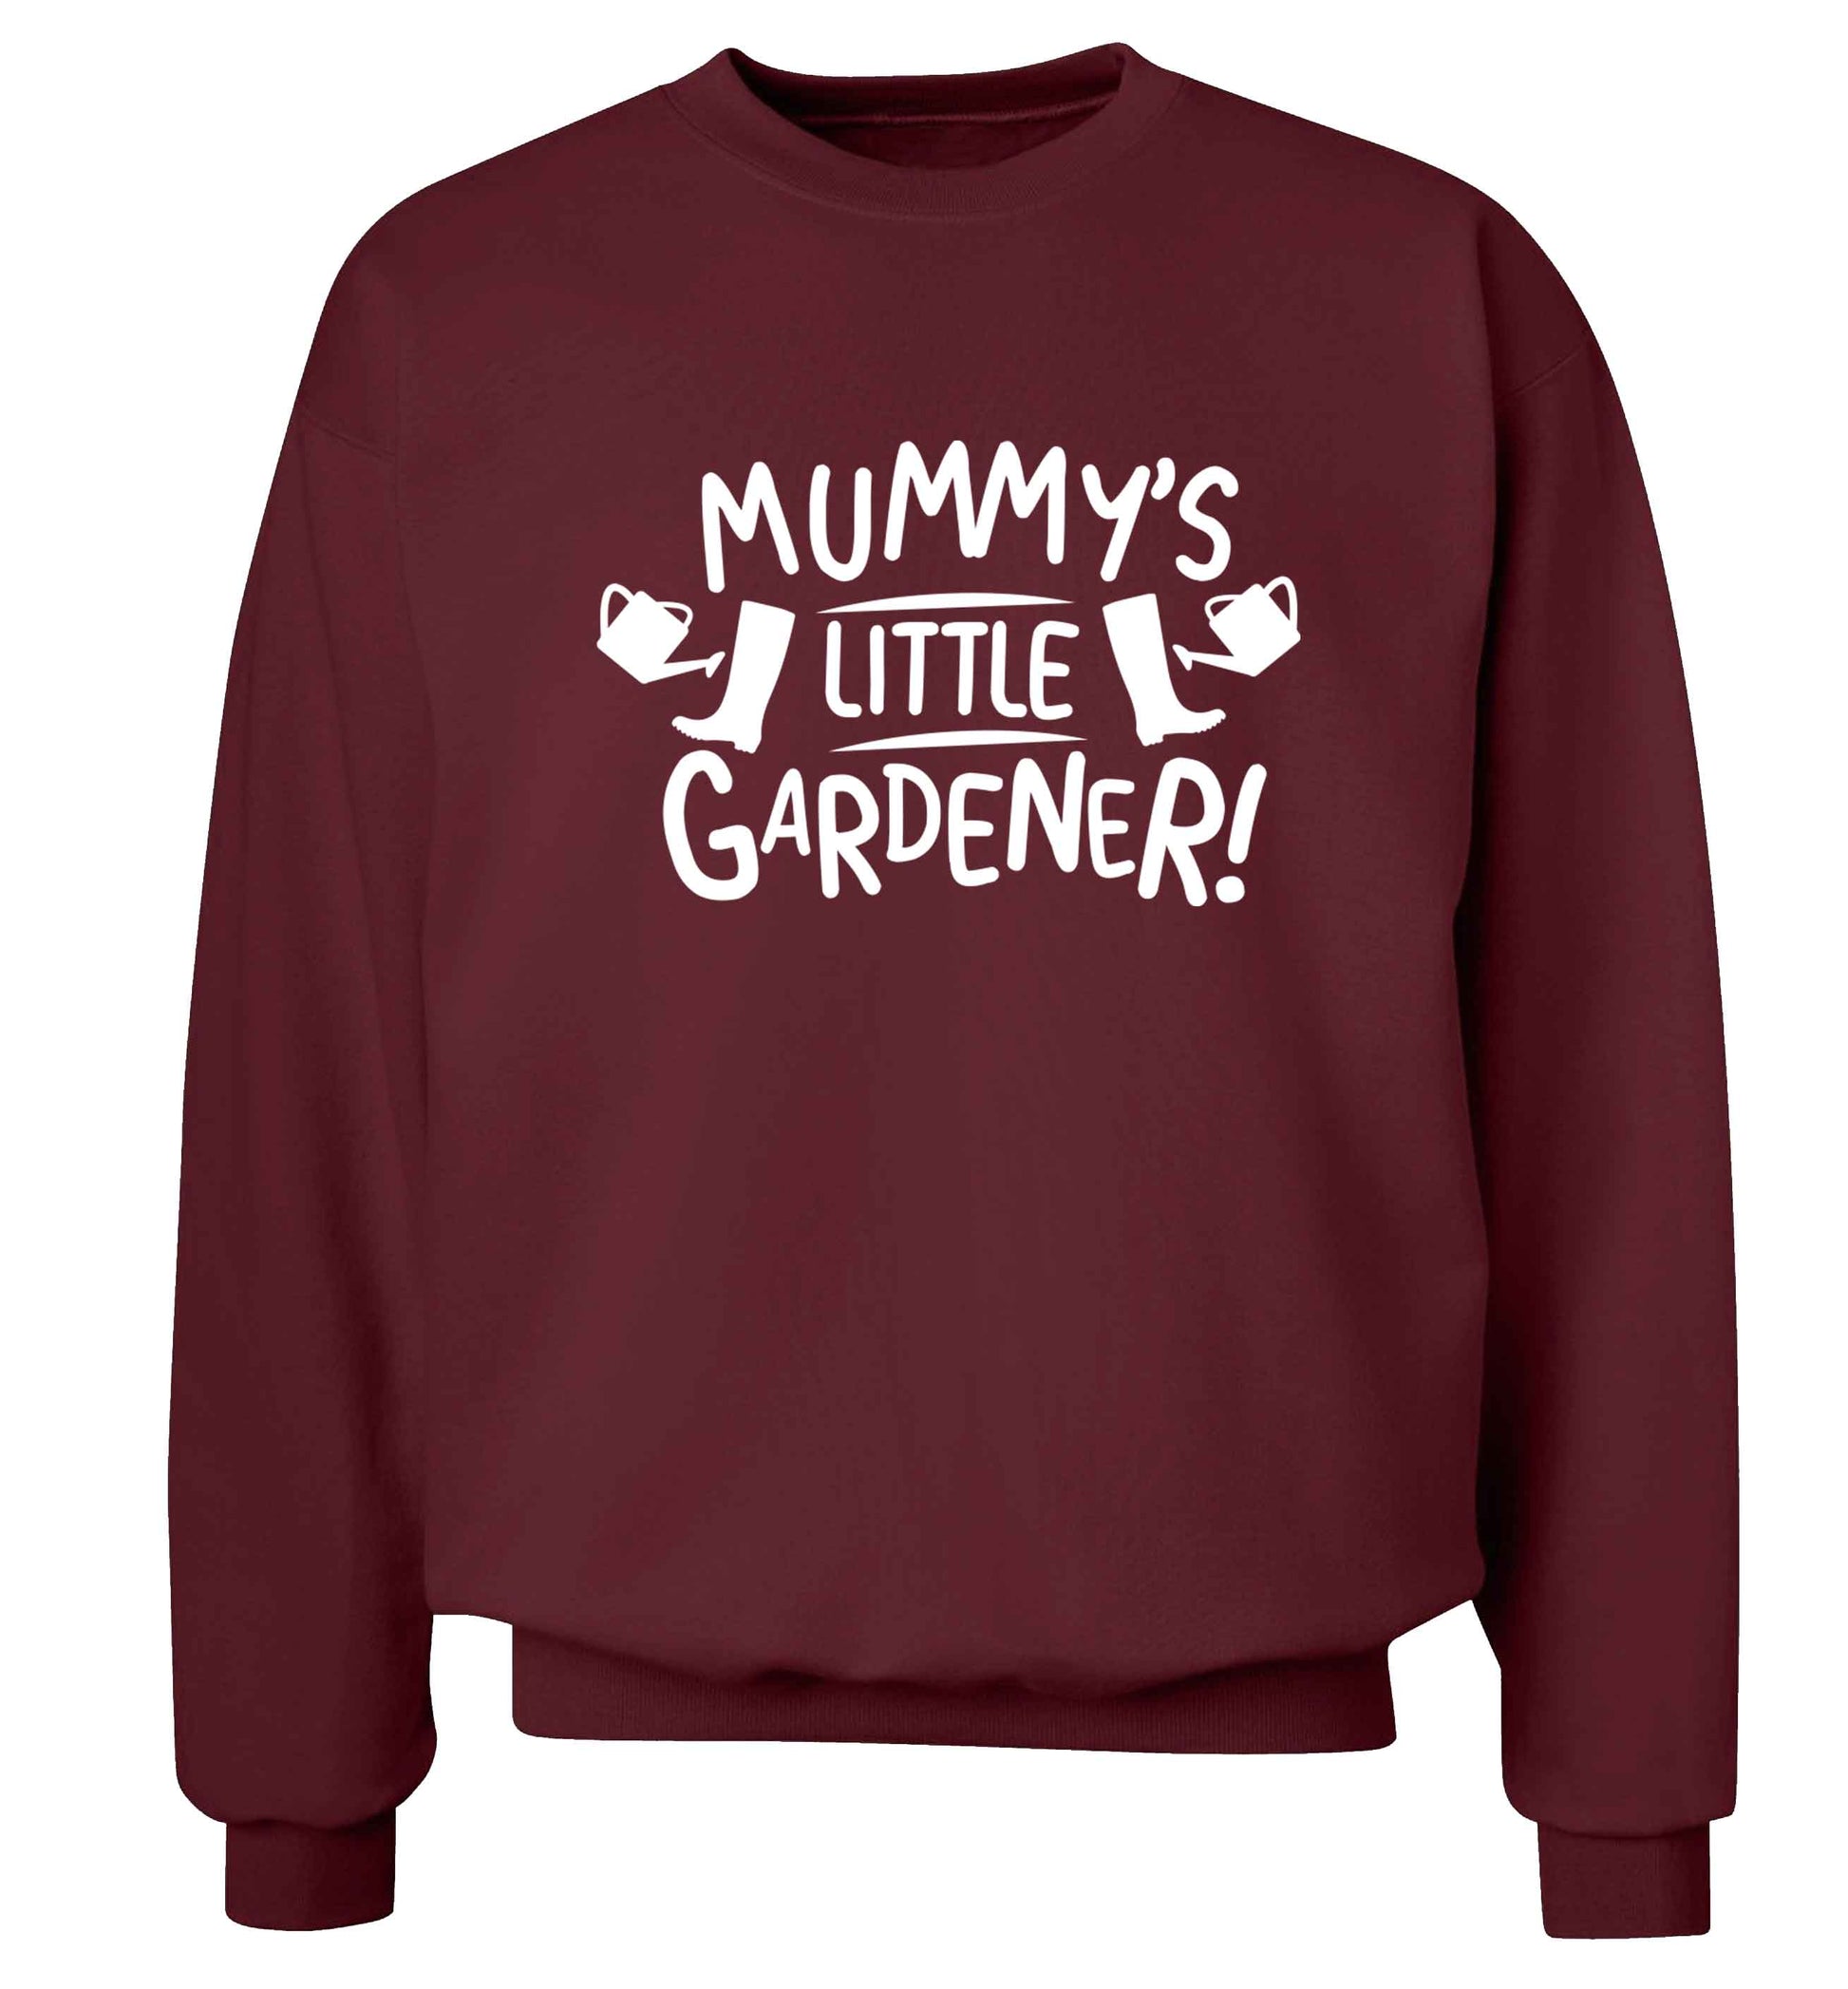 Mummy's little gardener Adult's unisex maroon Sweater 2XL